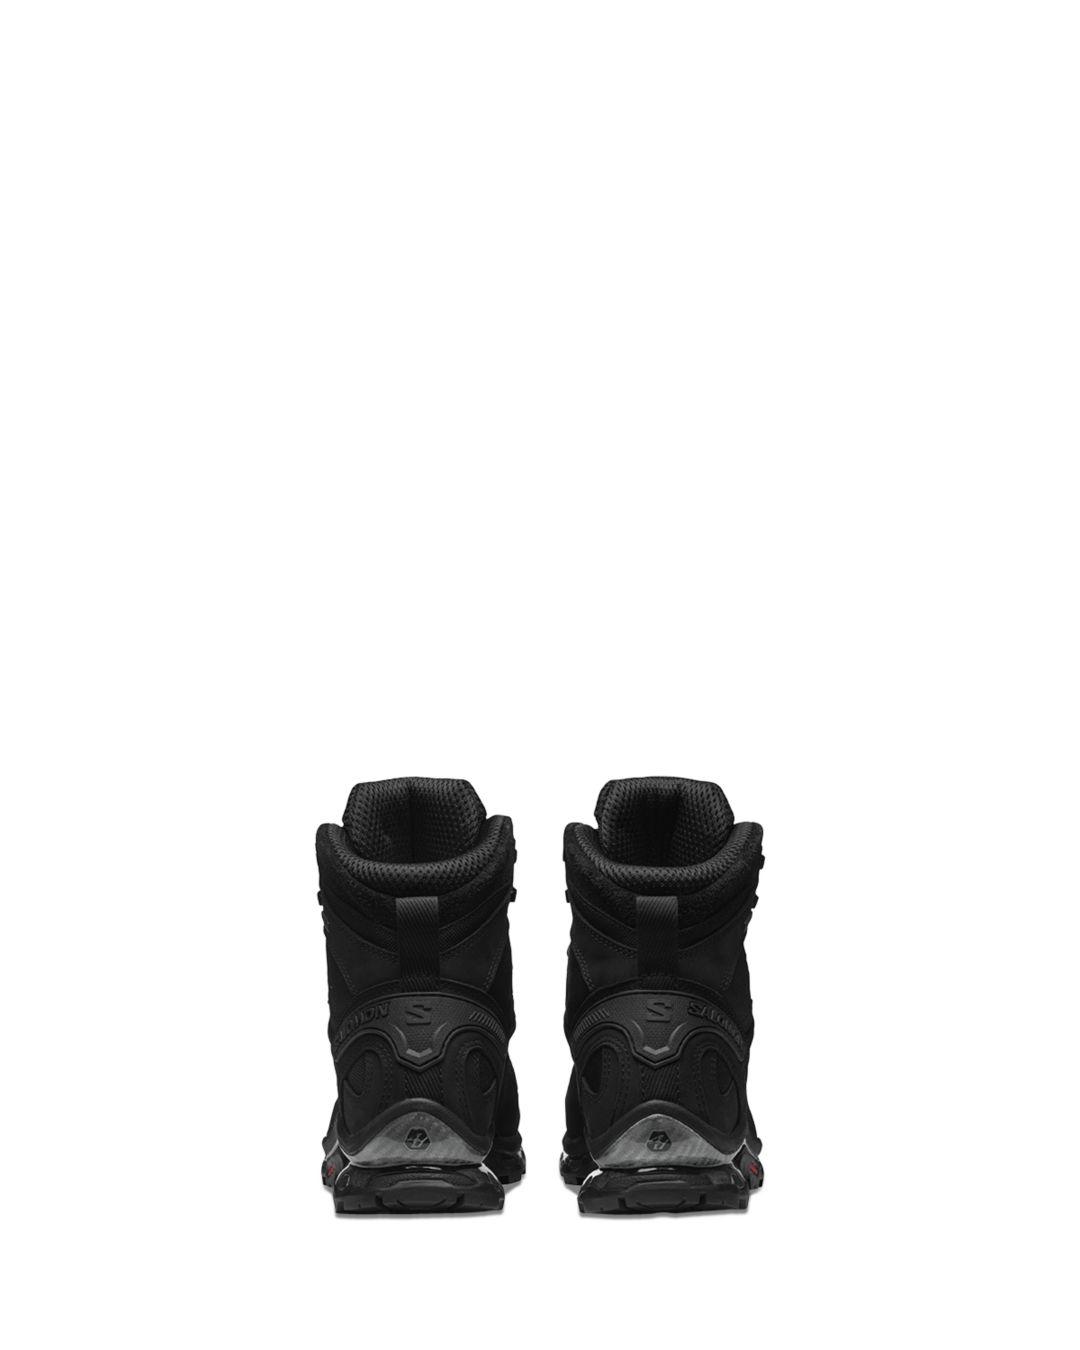 Salomon Quest 3 4d Gtx Advanced Lace Up Hiking Boots in Black for Men | Lyst